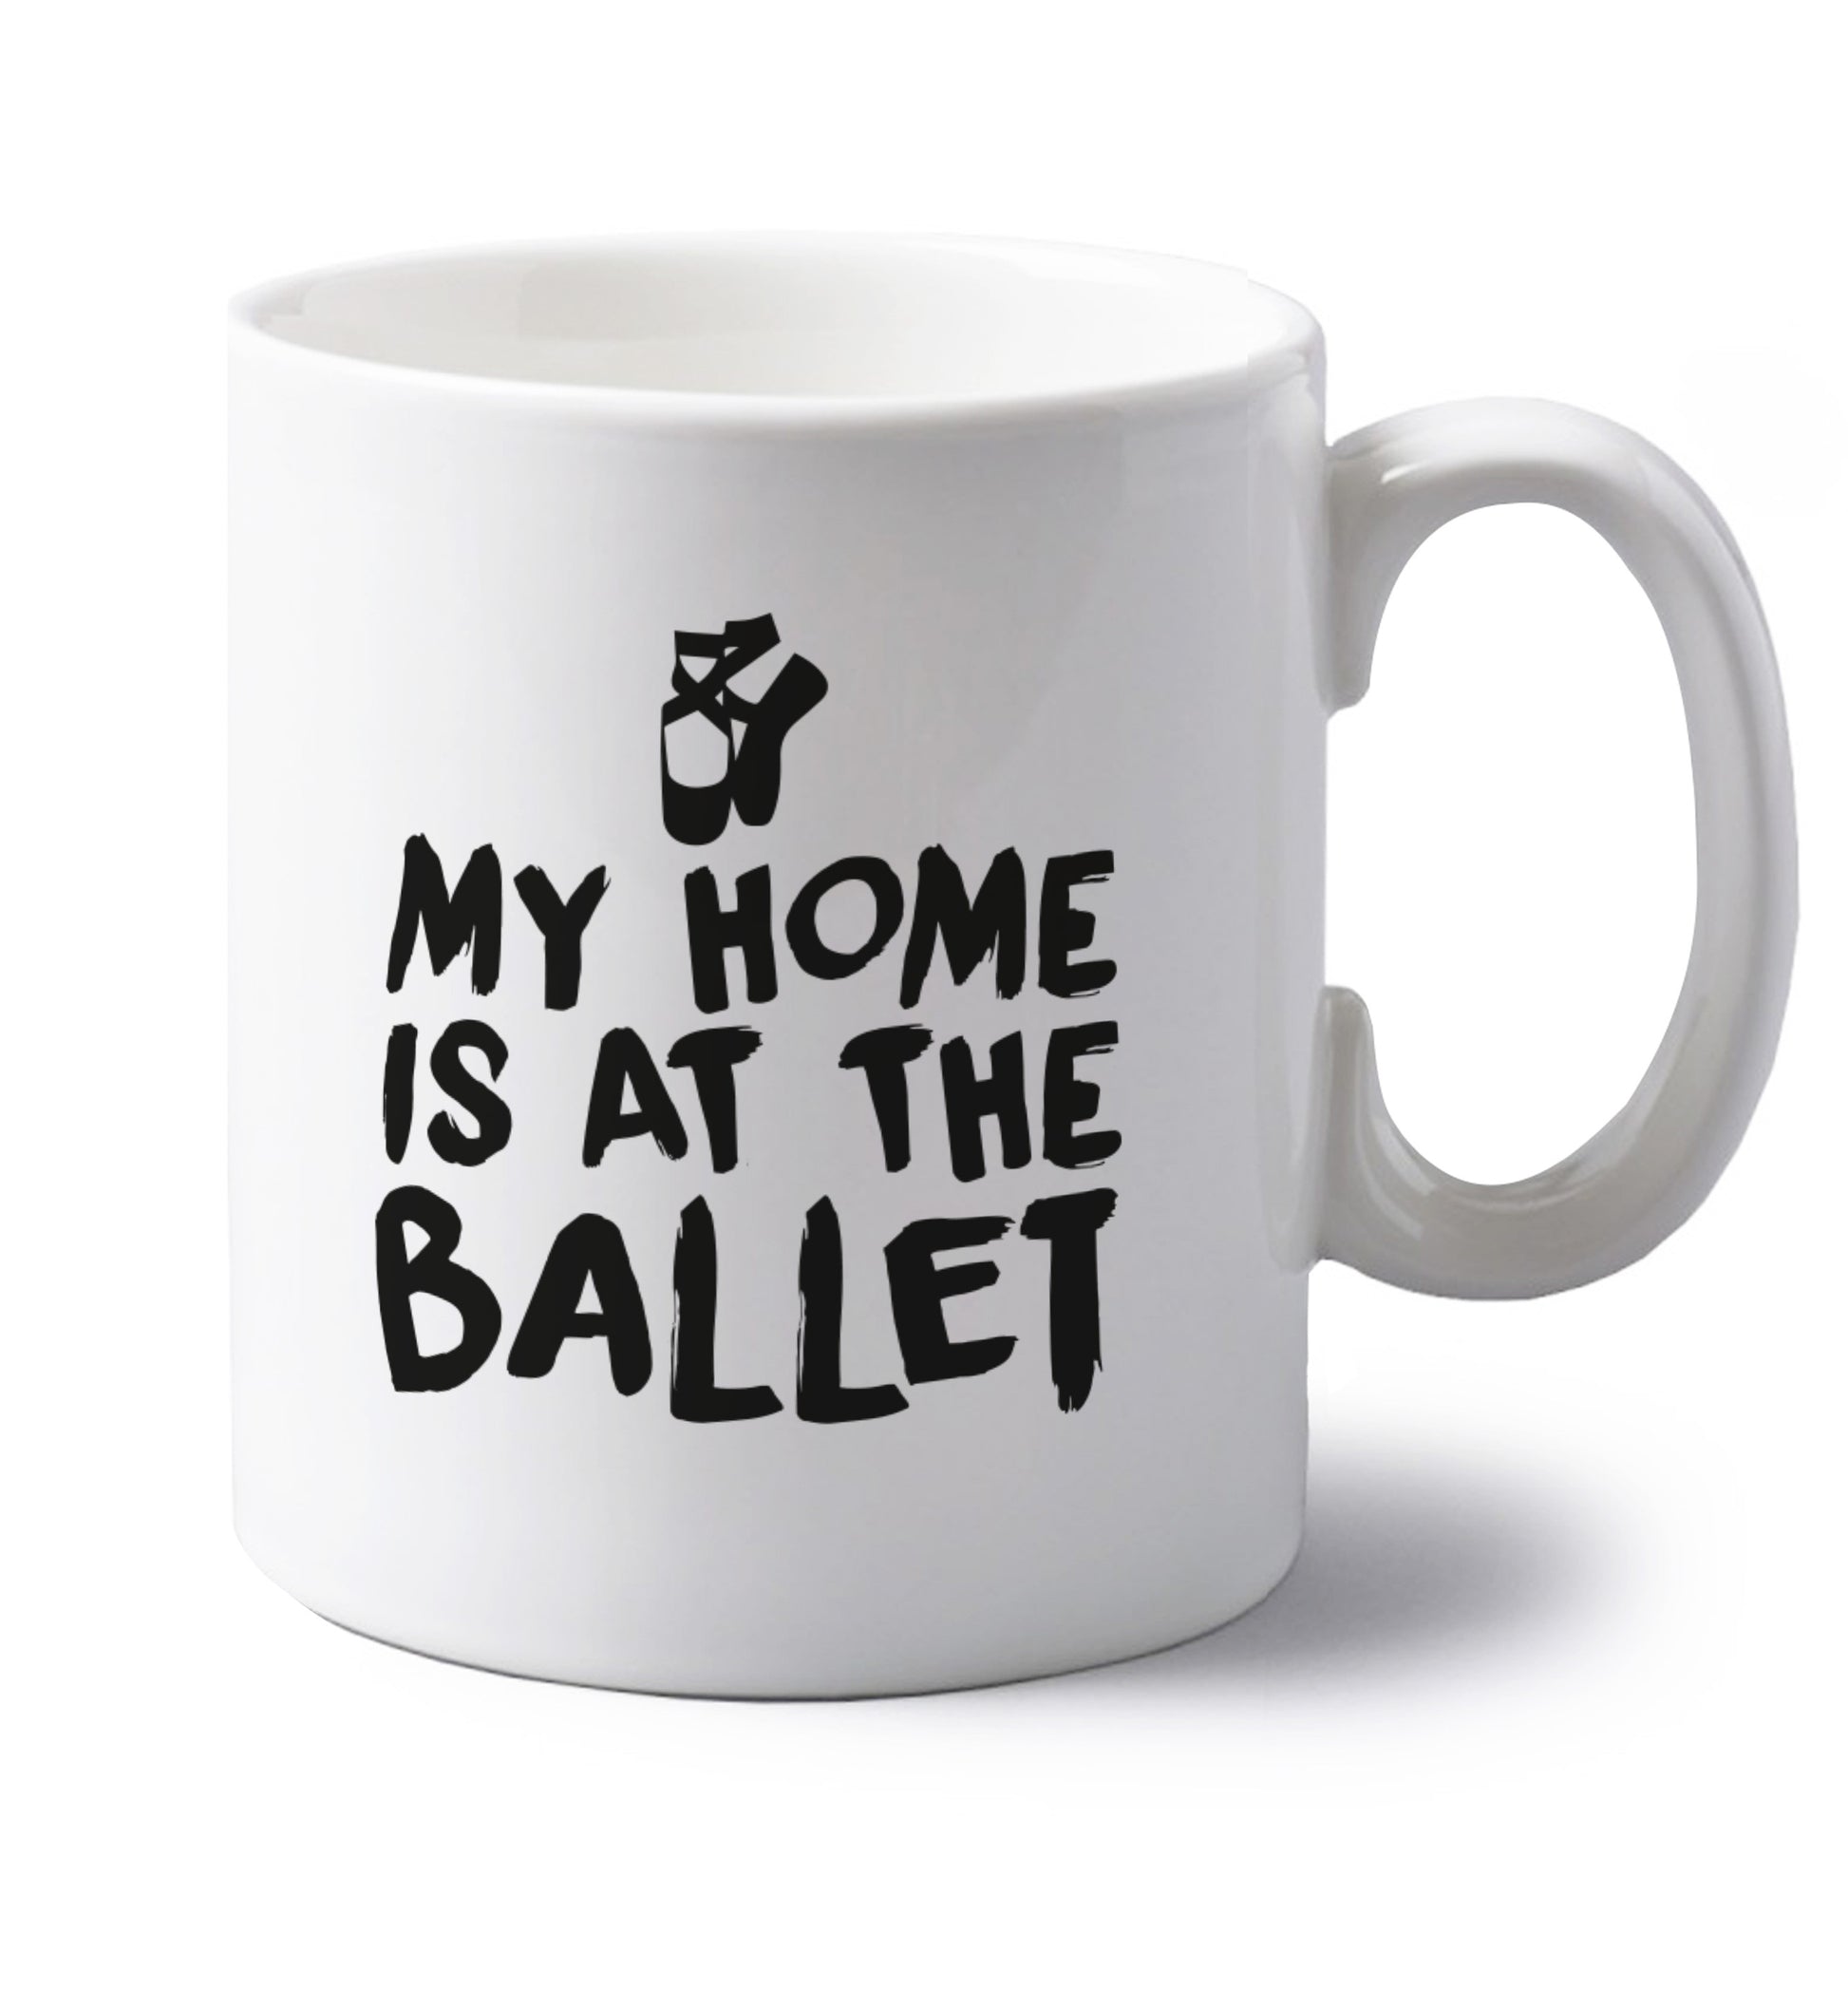 My home is at the ballet left handed white ceramic mug 